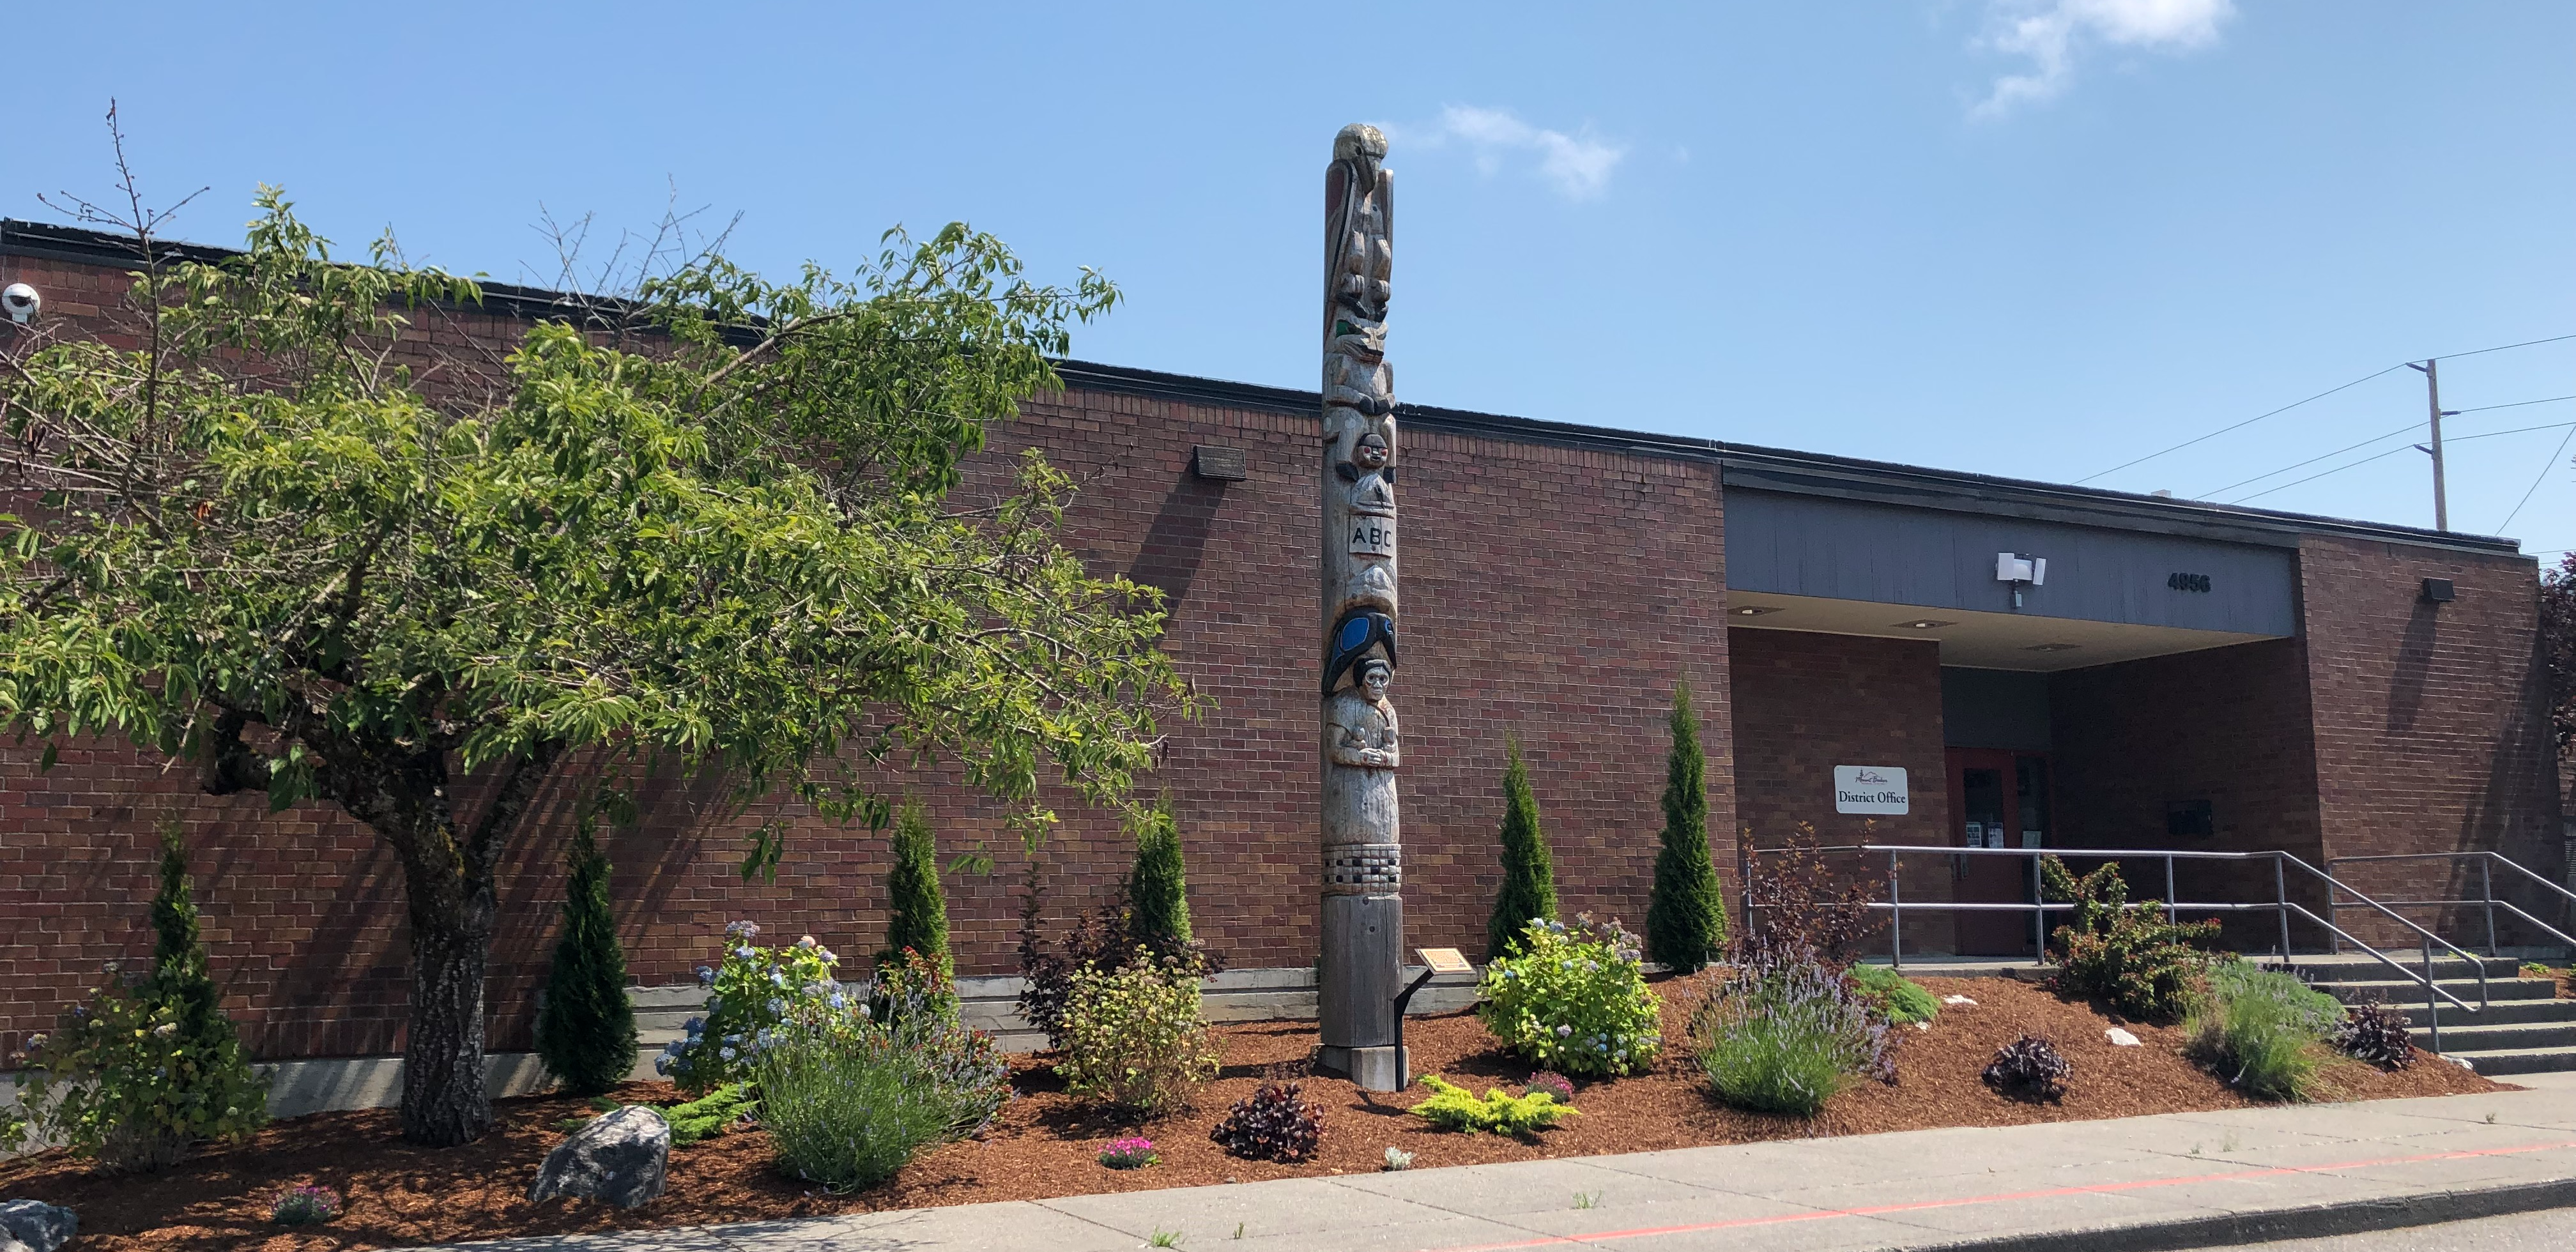 Mount Baker School District Office, Brick Building, Totem Pole, Tree, Shrubs